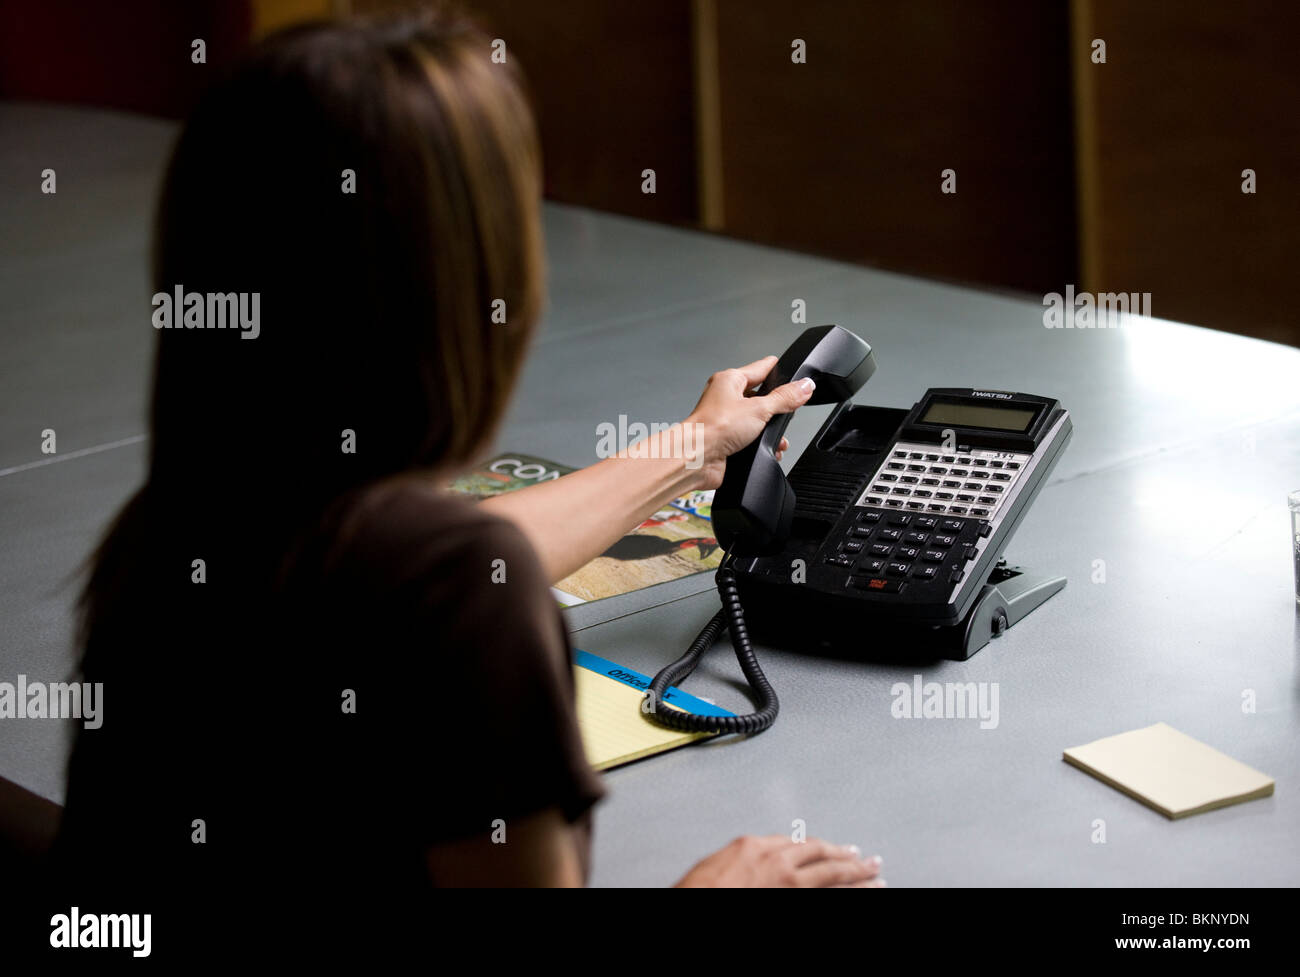 Woman picks up an office phone. Stock Photo